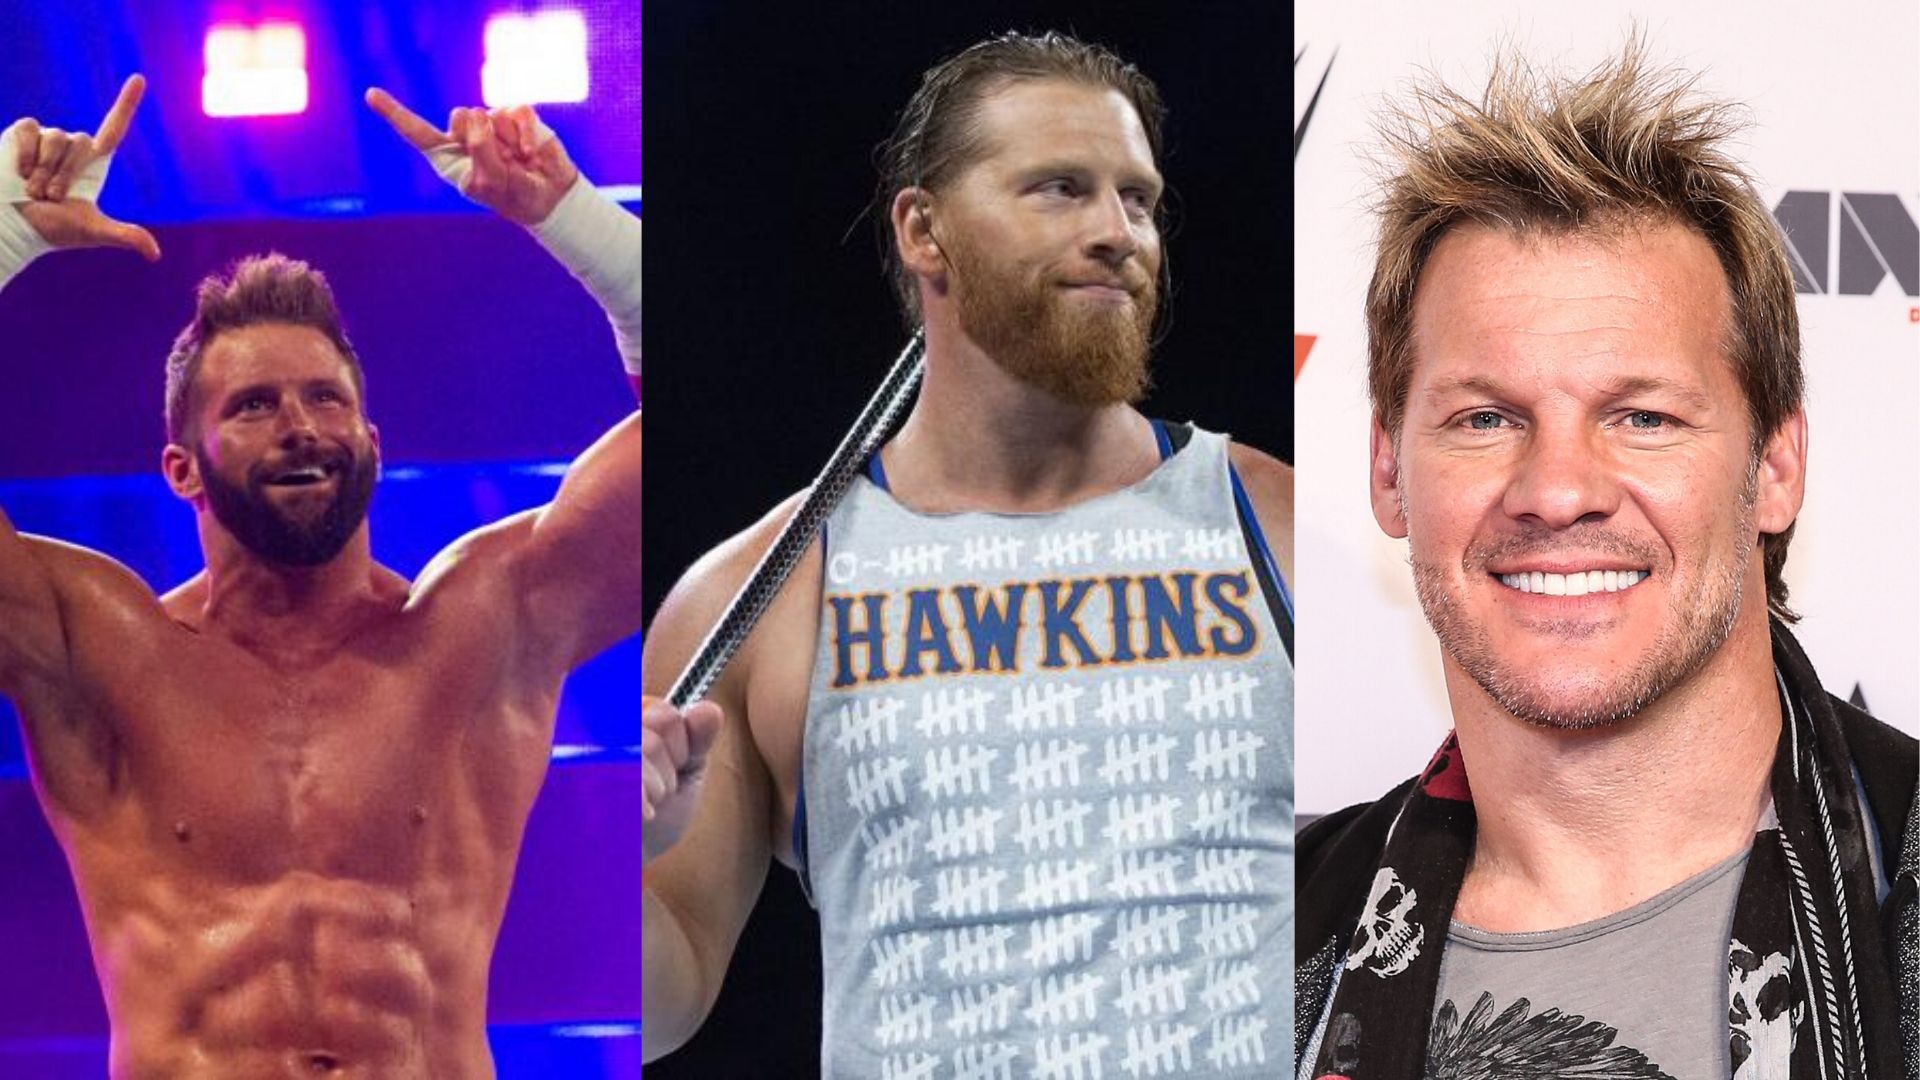 Chris Jericho, Zack Ryder and Curt Hawkins spoke about the Great Khali